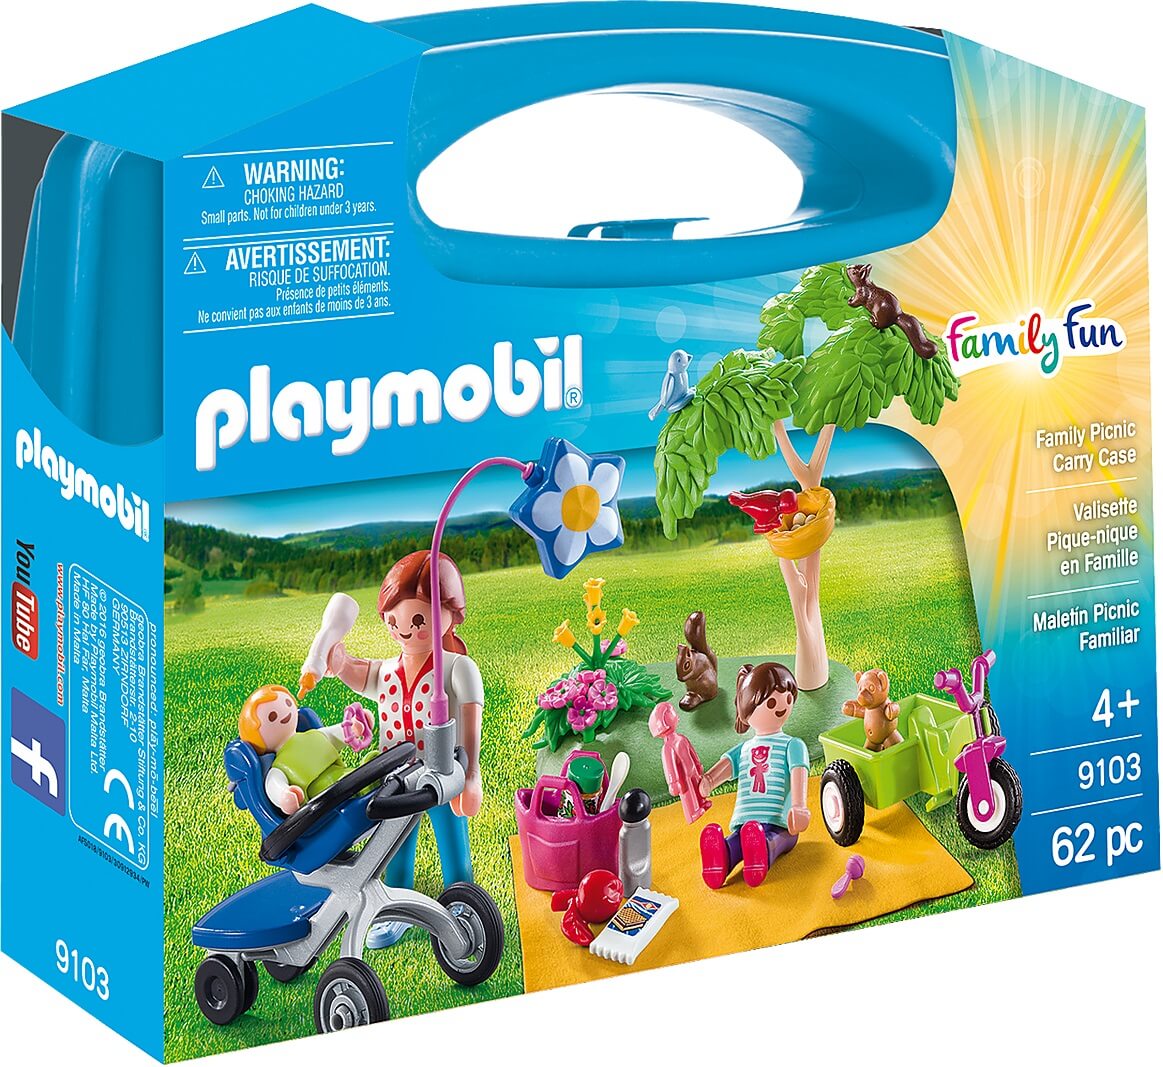 MaletIn Grande PIcnic Familiar ( Playmobil 9103 ) imagen b